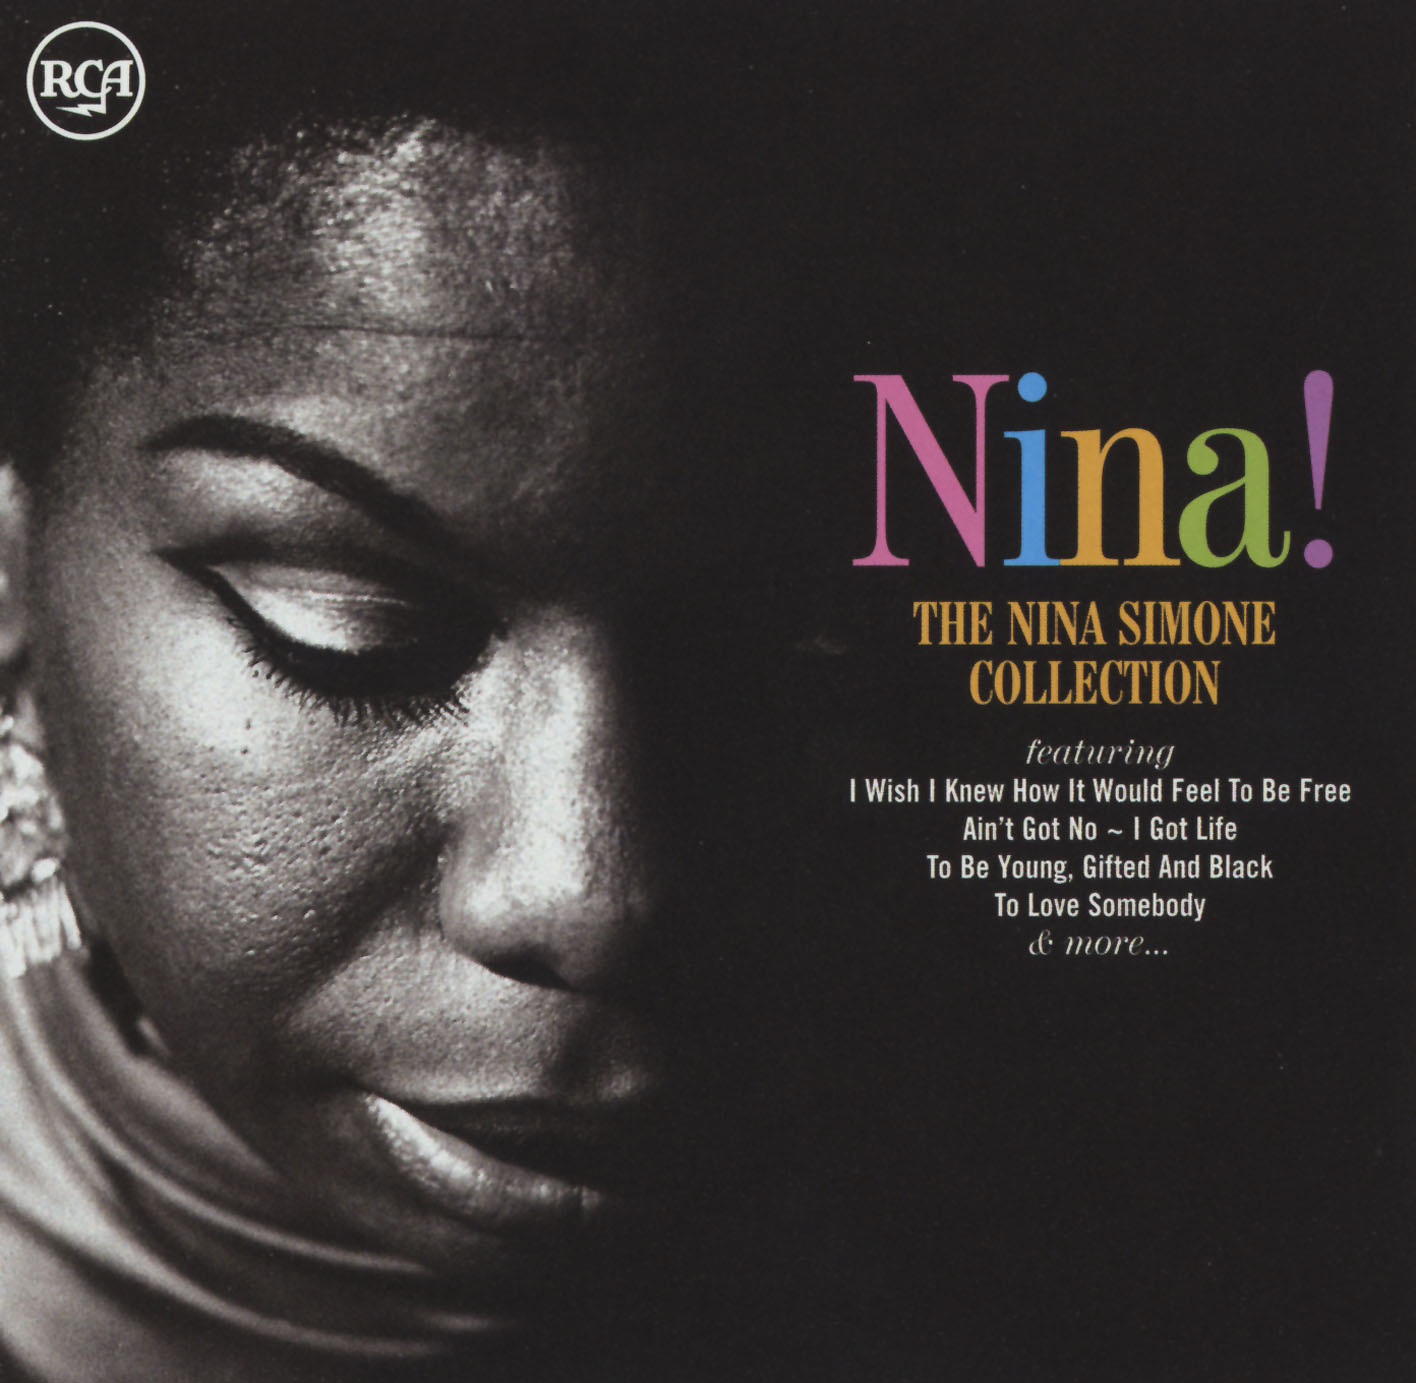 Nina! The Collection